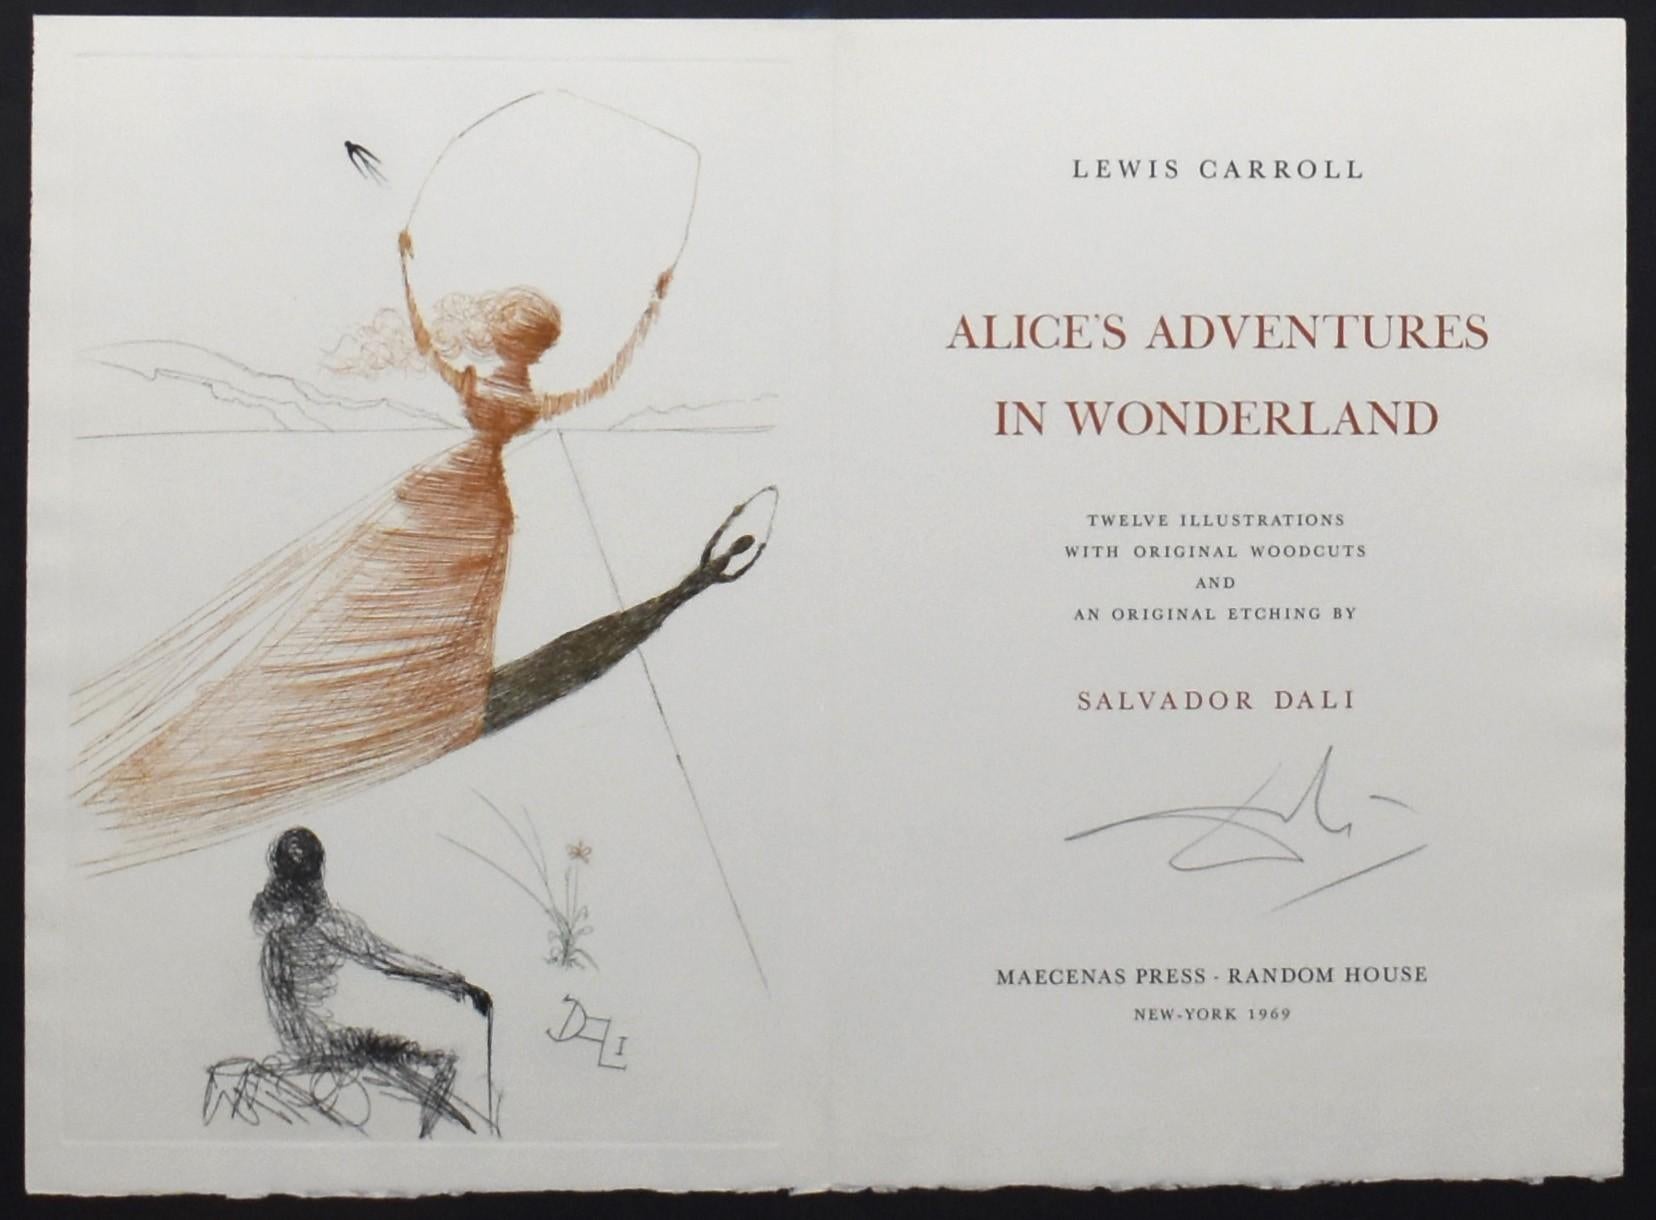 Alice in Wonderland 1